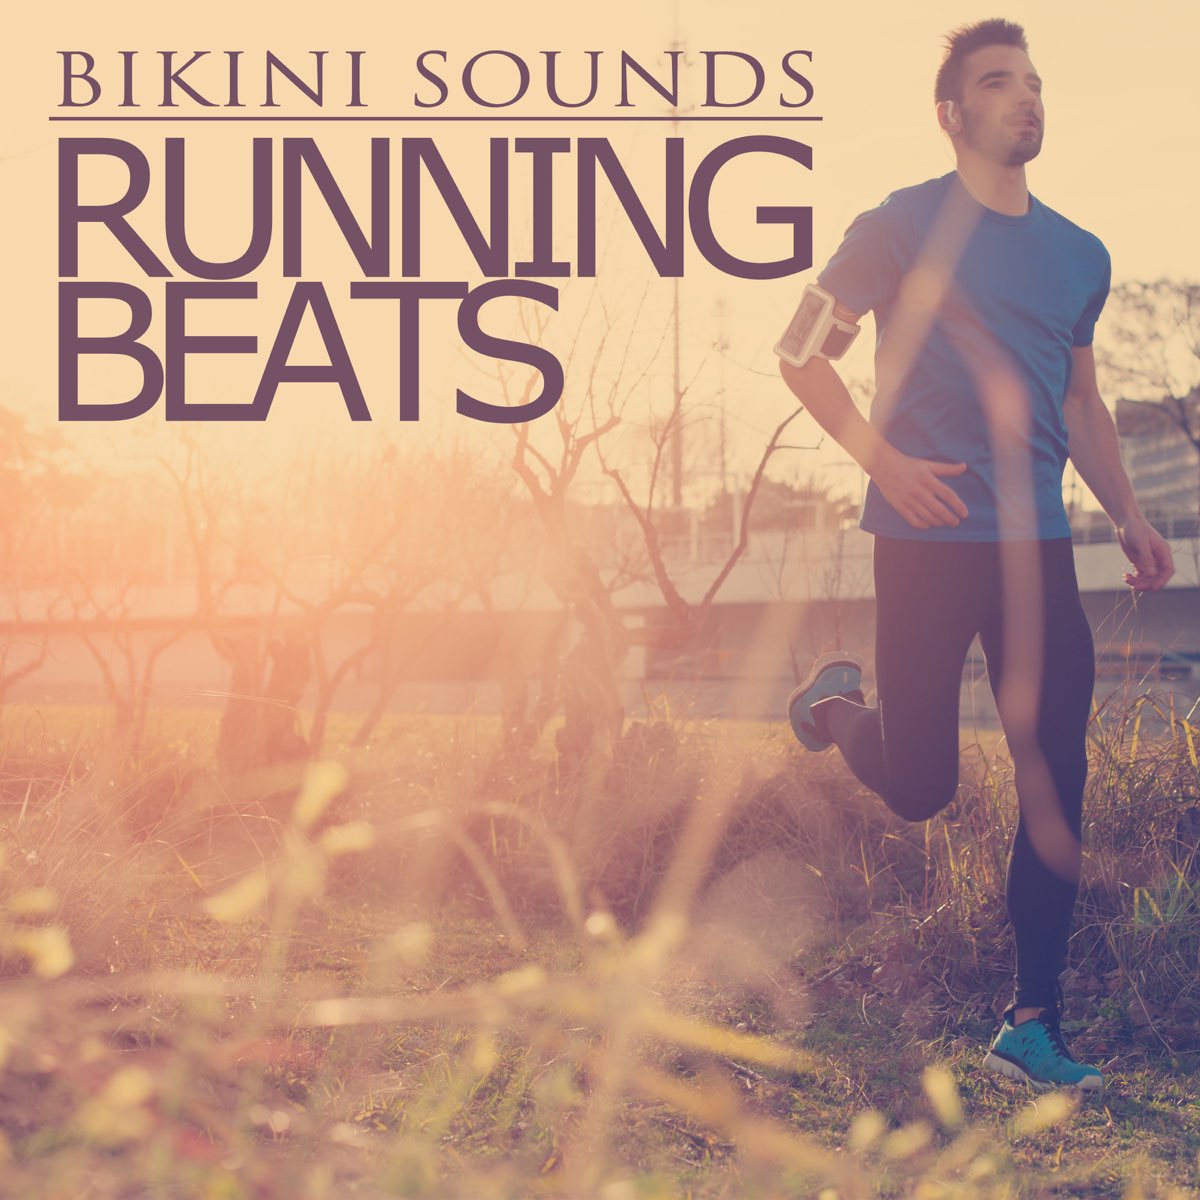 Sound Run. Beat Run. Run. On a Beat песня.